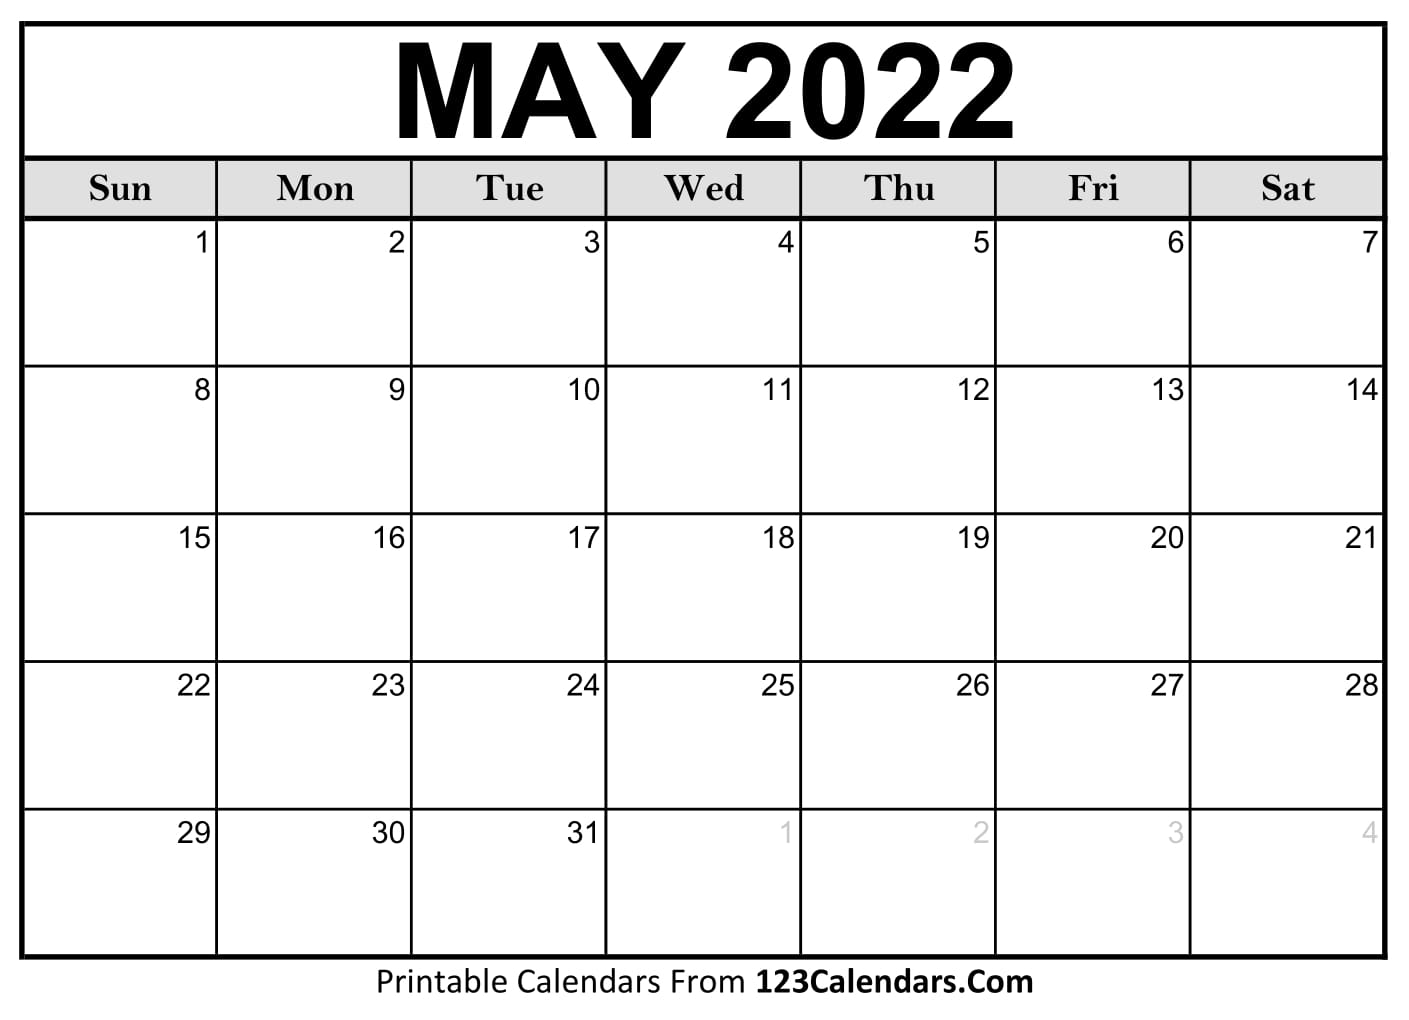 Print A Calendar May 2022 Printable May 2022 Calendar Templates - 123Calendars.com